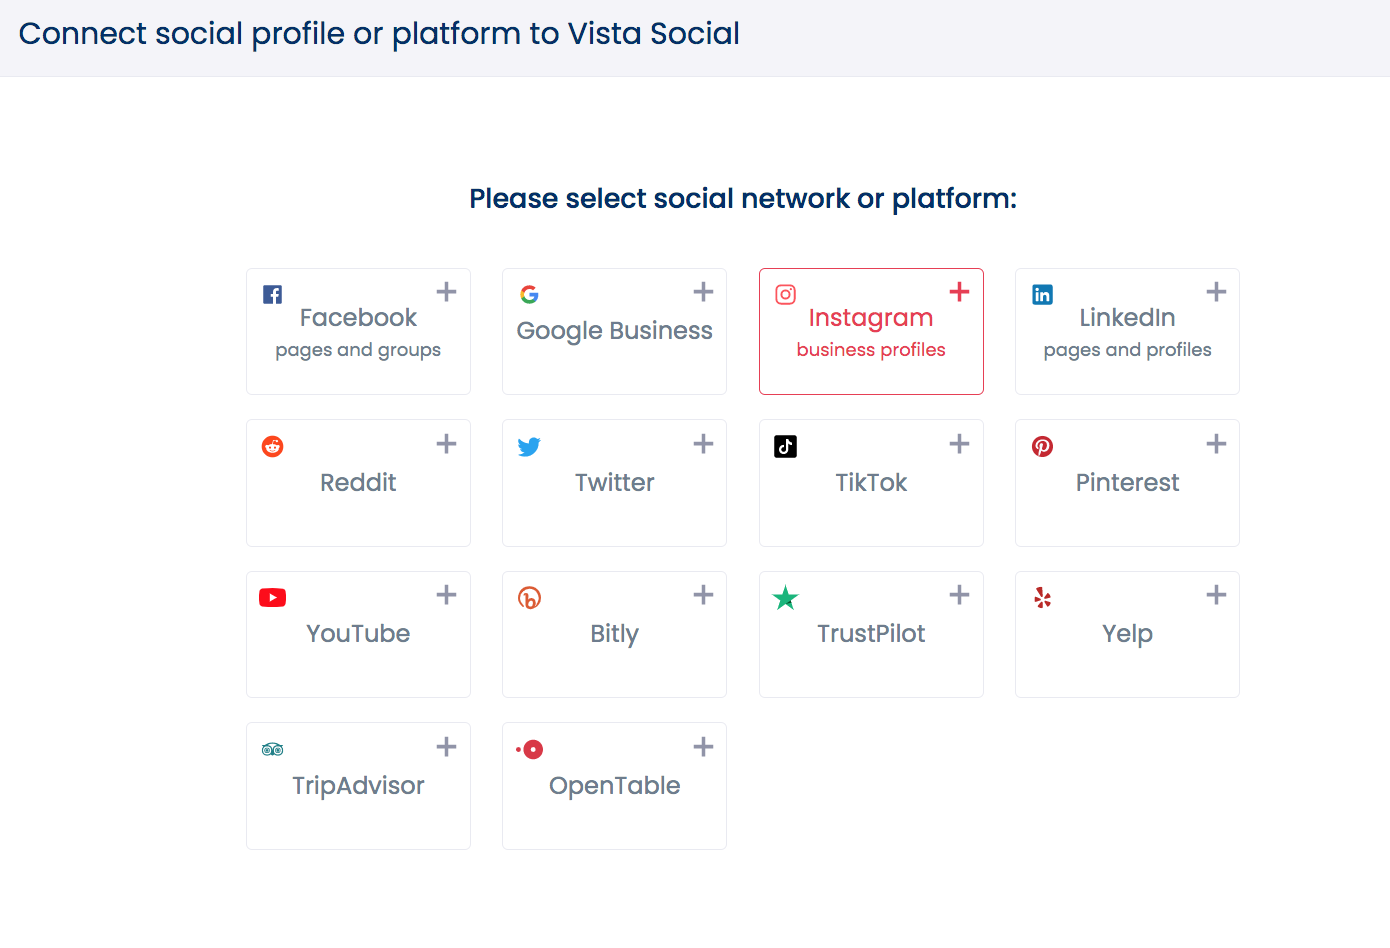 Vista Social has a ton of social media integrations available